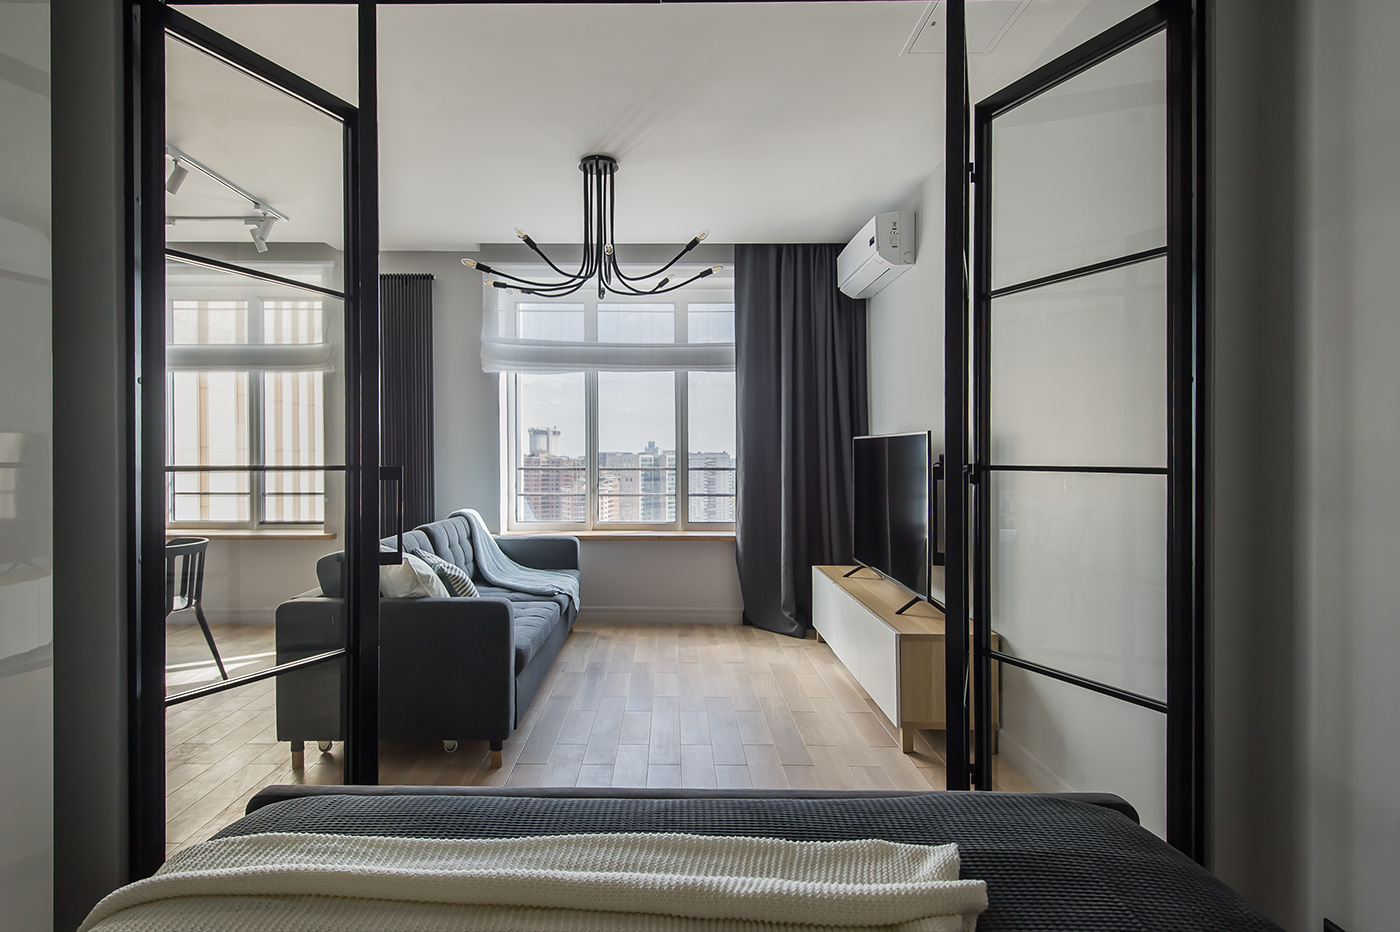 design interior interior minimalism дизайн интерьера дизайн интерьера москва Дизайн квартиры Дизайнер интерьера Москва реализованный проект